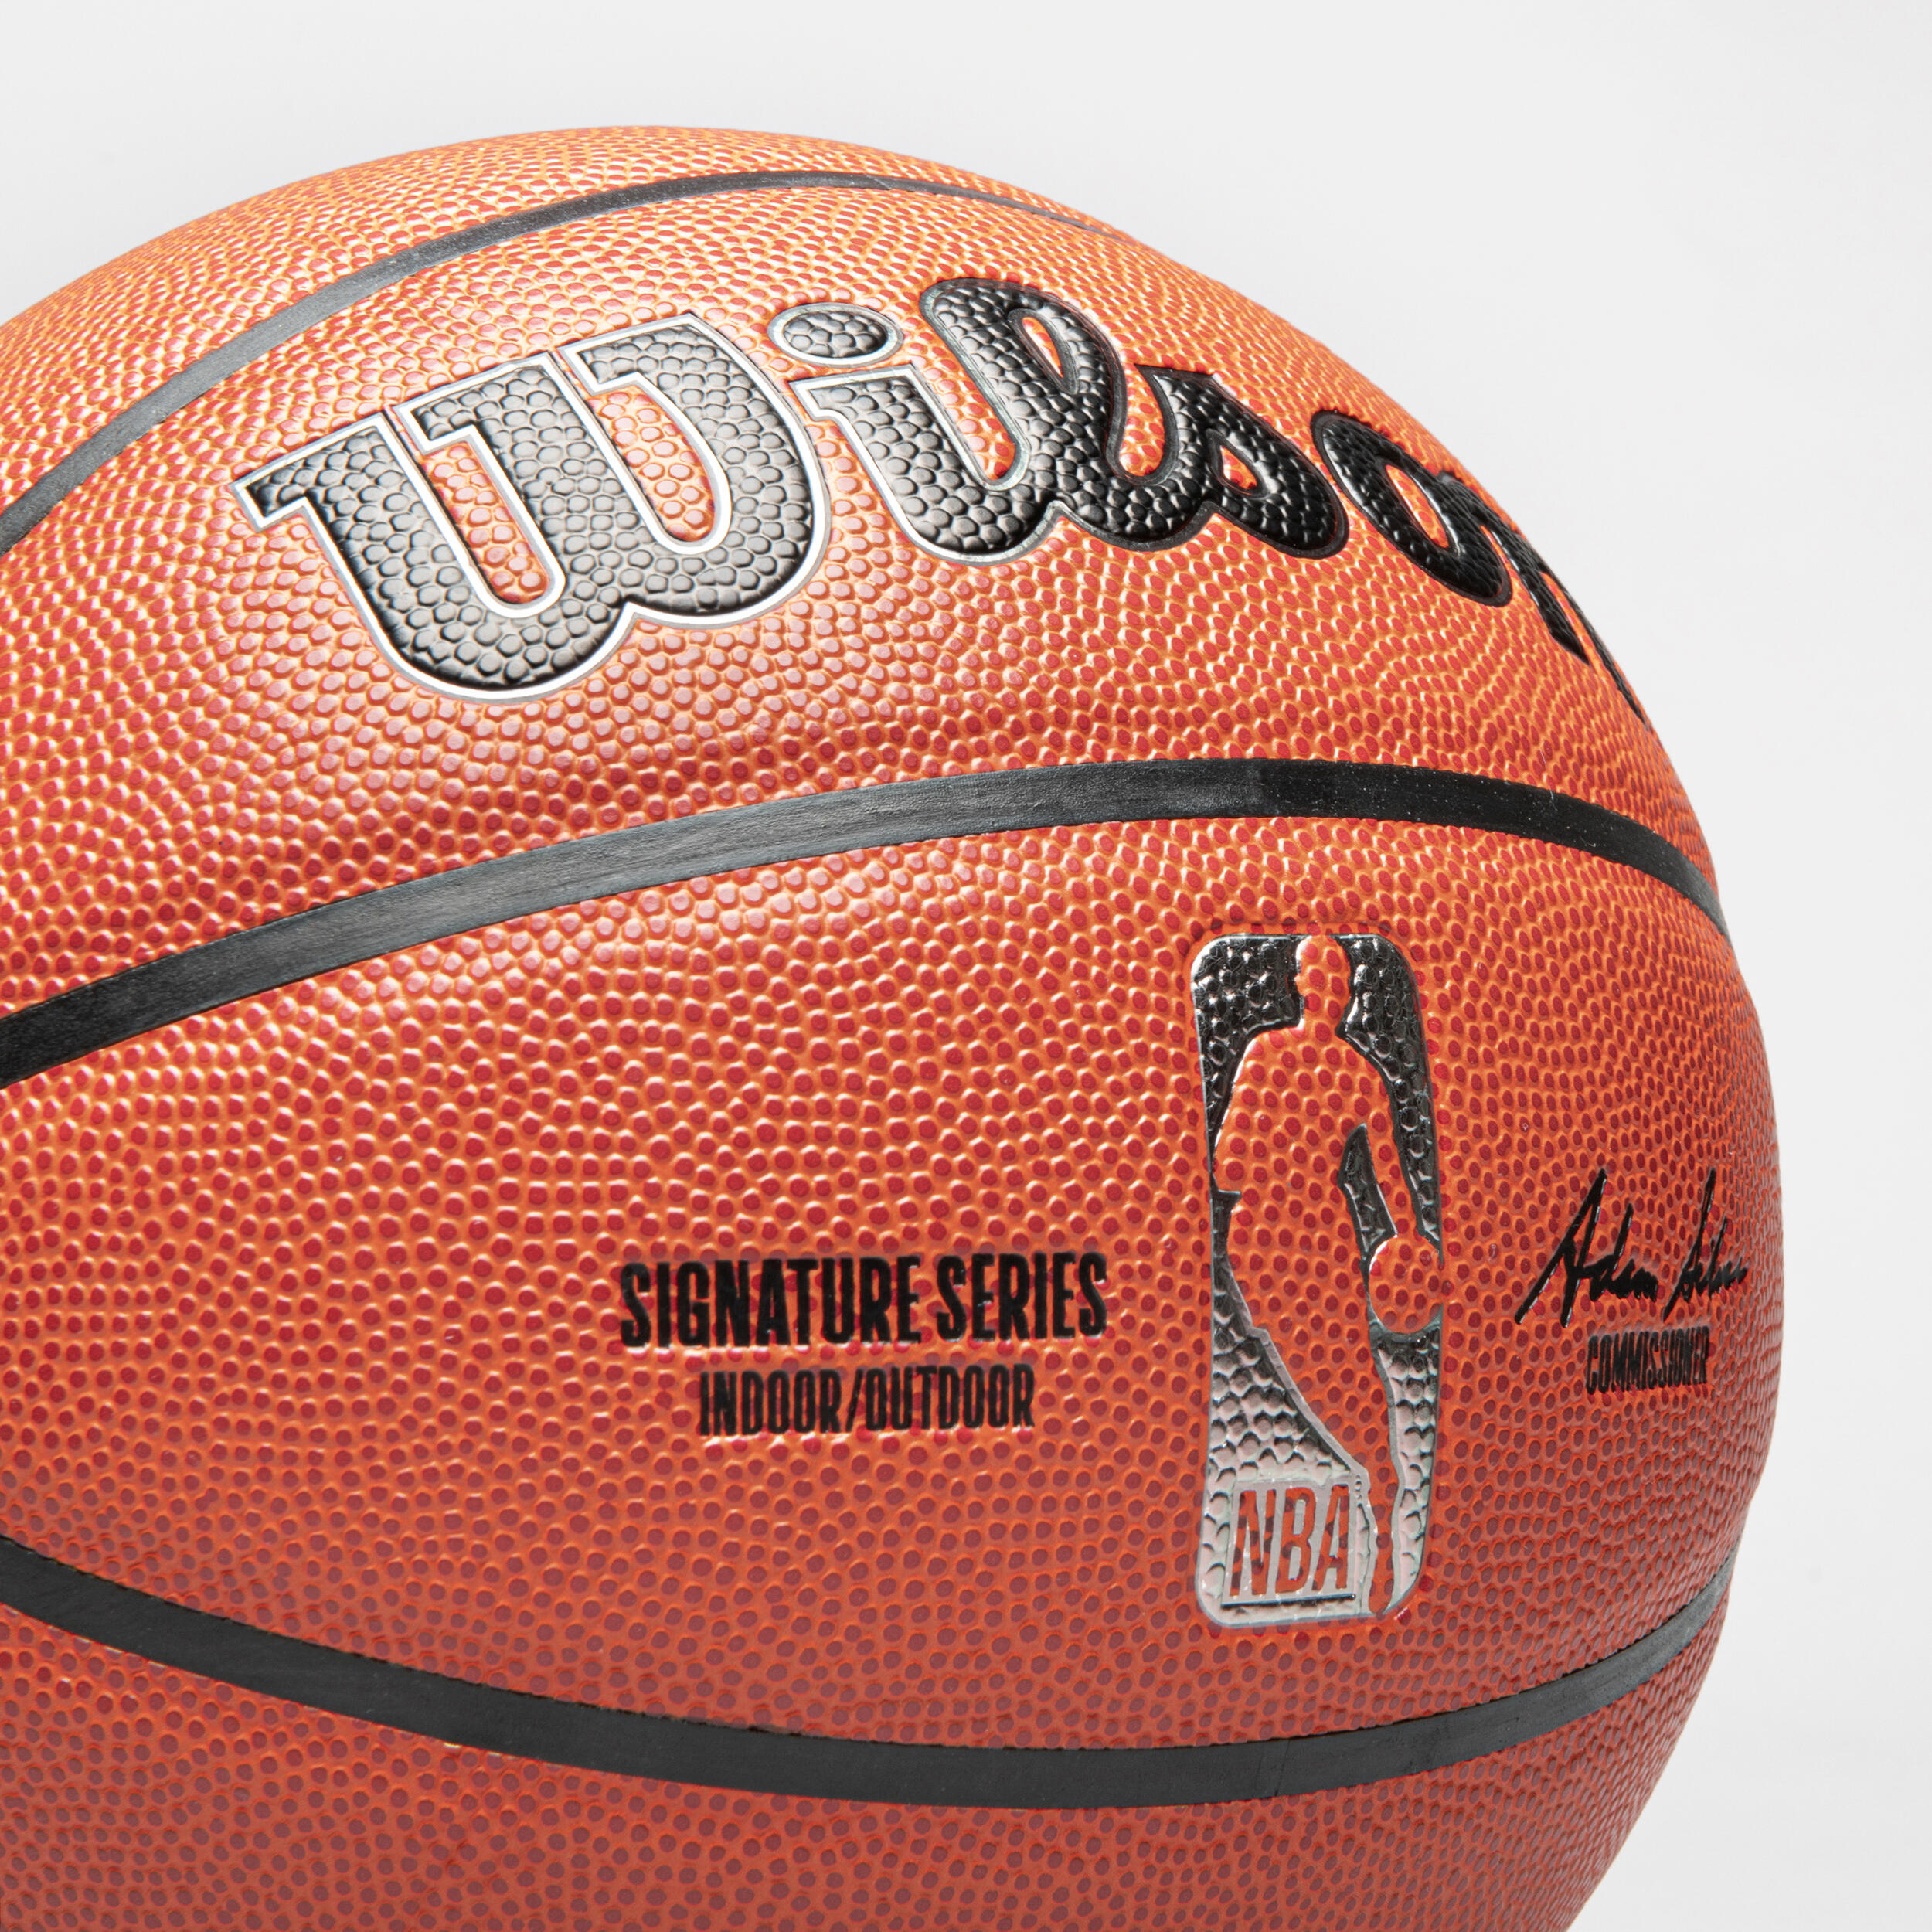 Size 7 Basketball NBA Signature Series - Orange 4/5